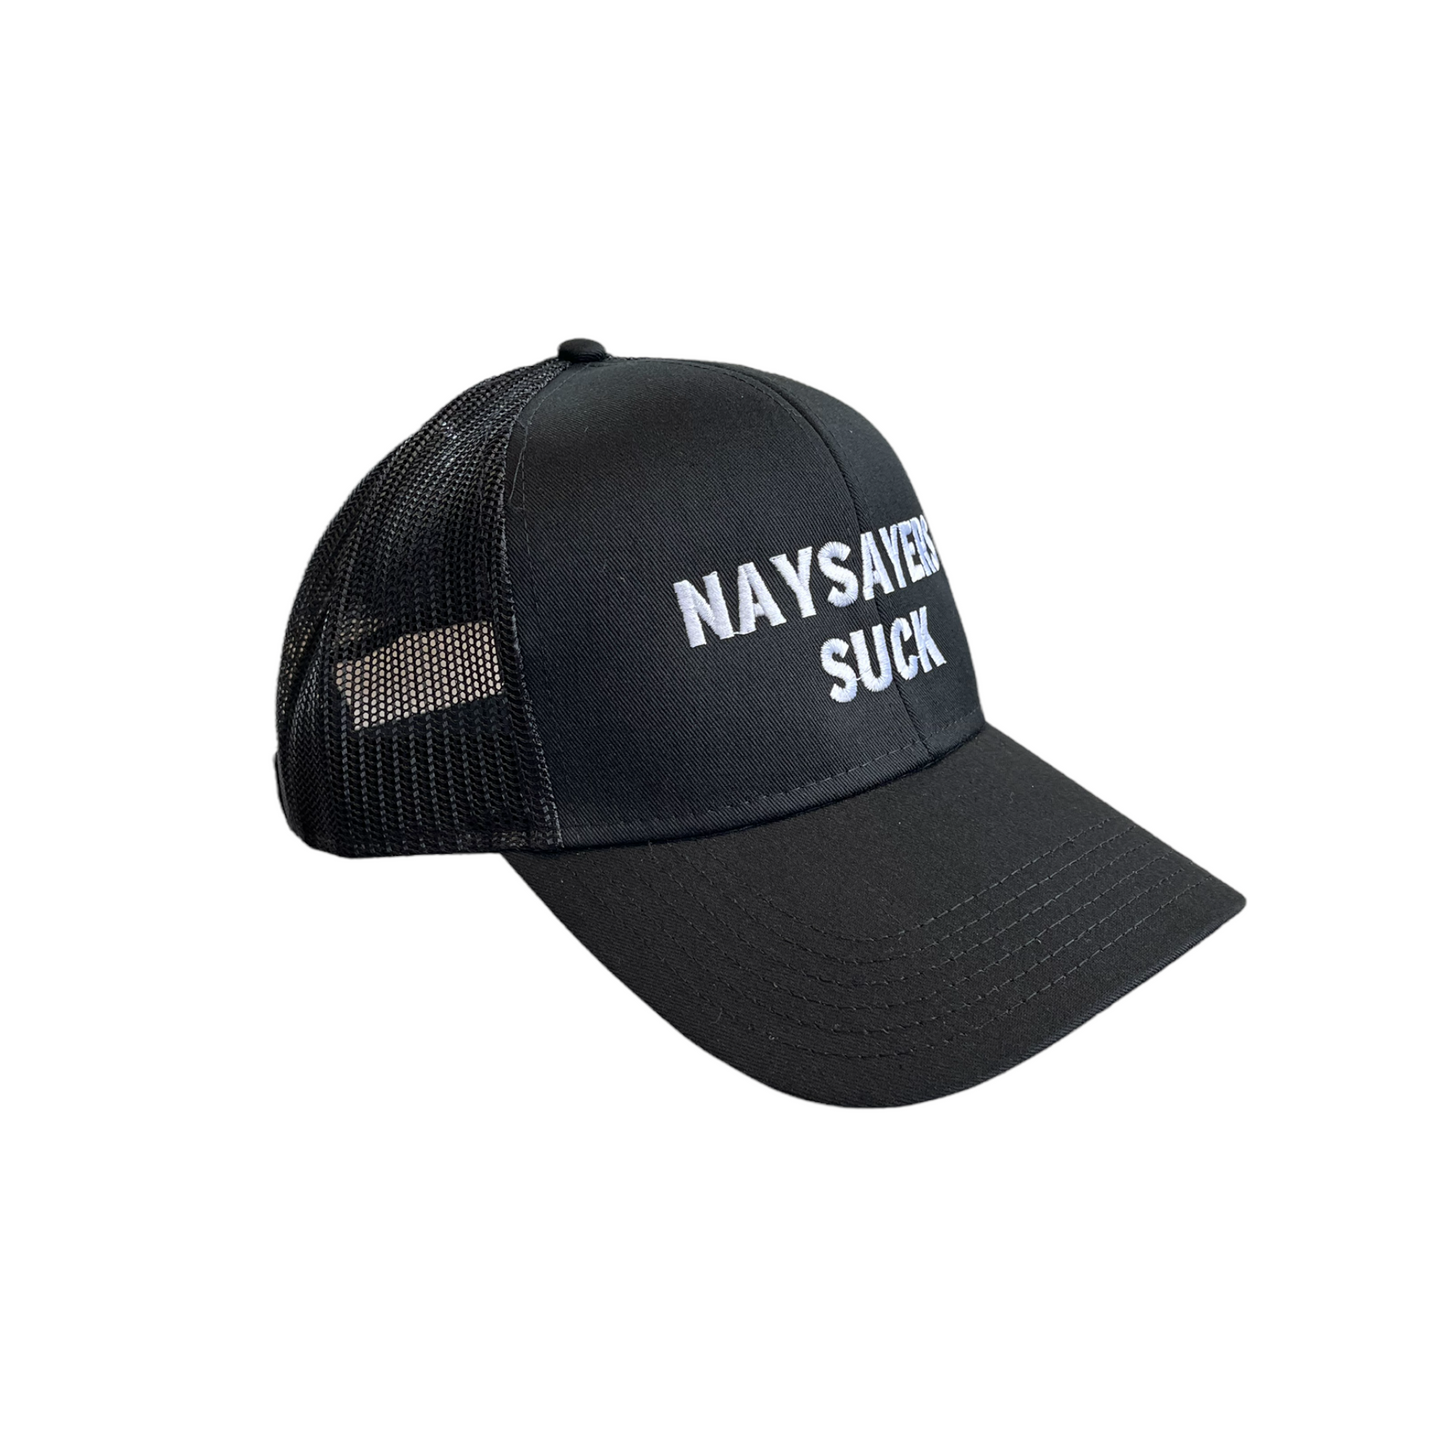 Naysayers Suck Cap